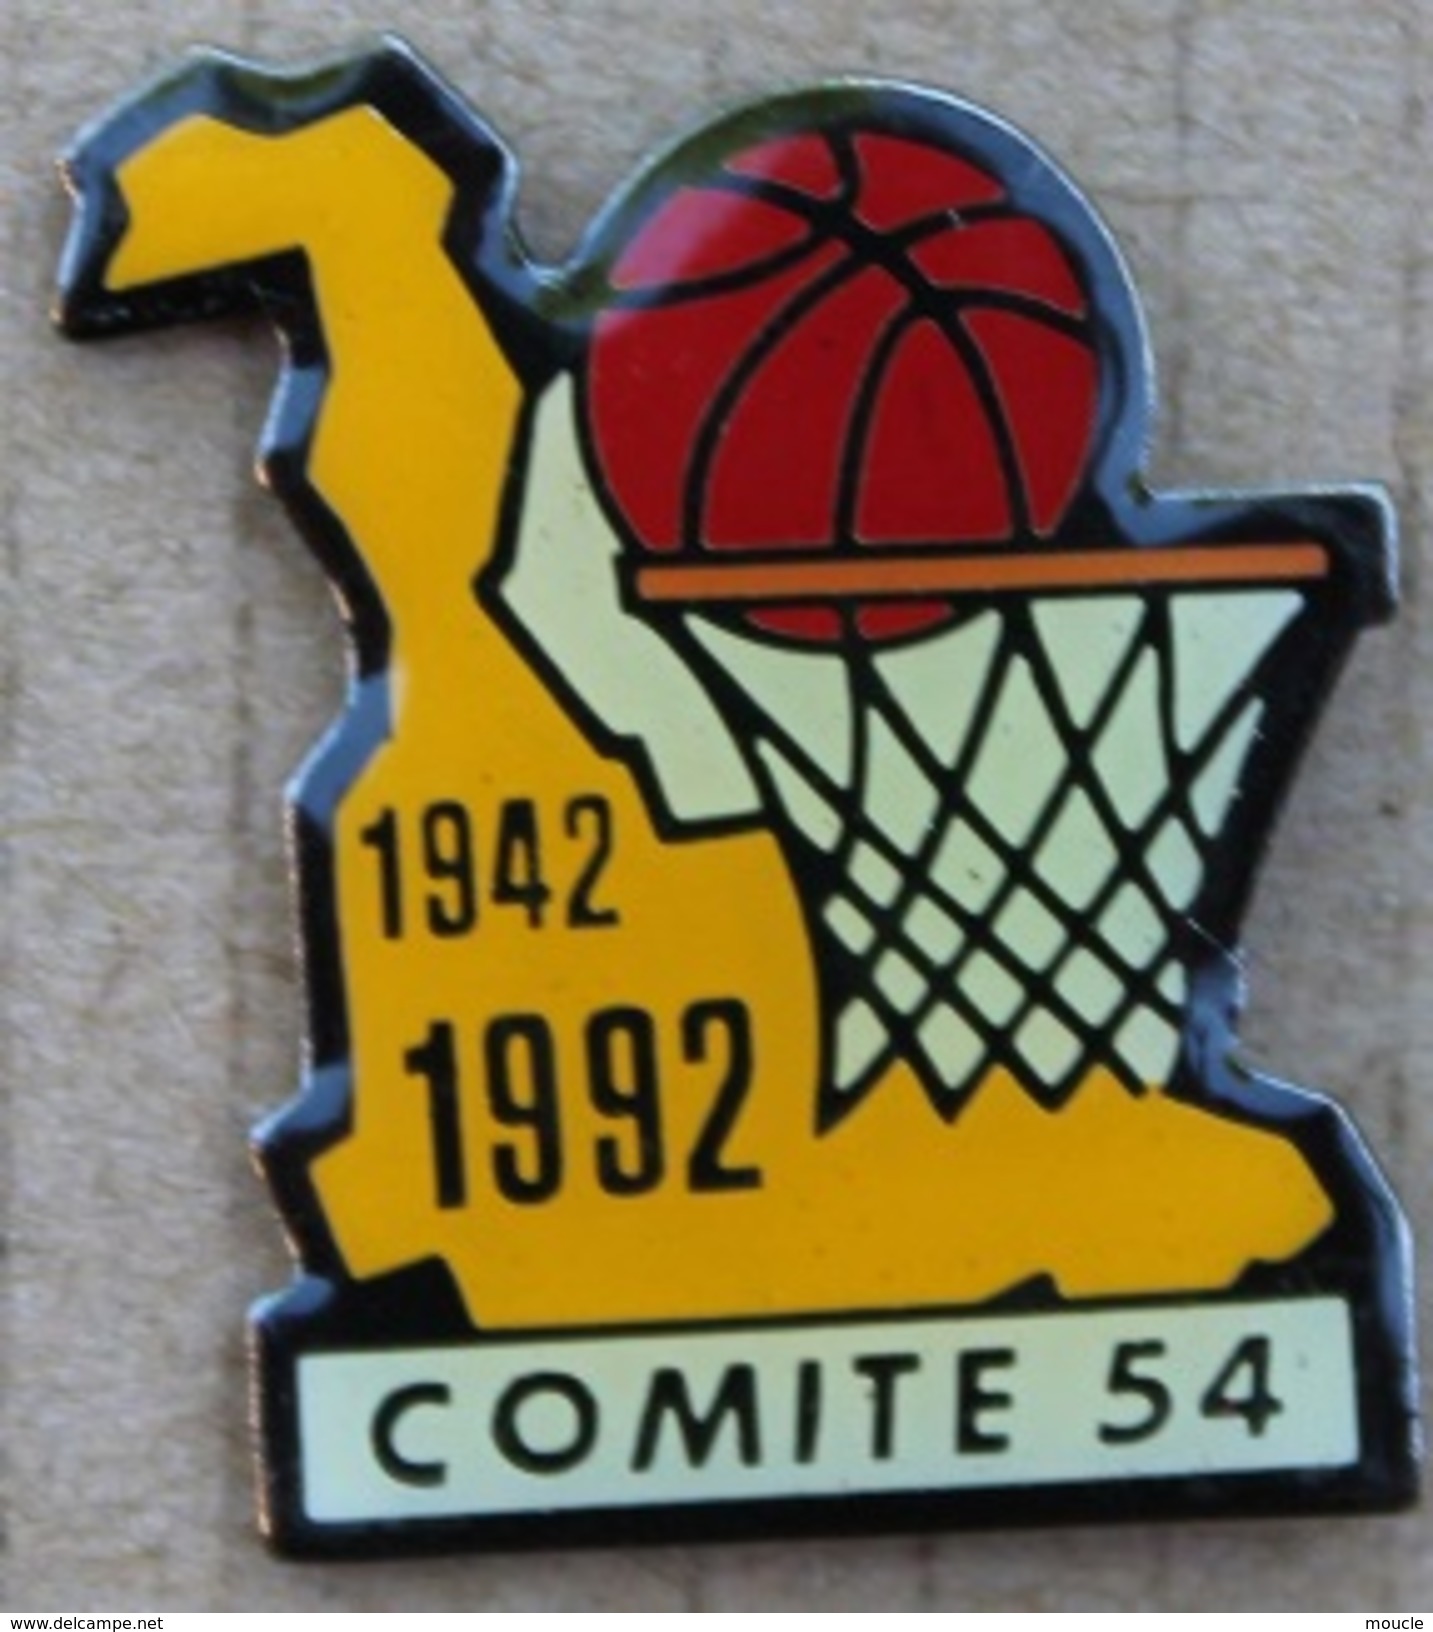 BASKETBALL - PANIER - BALLON - 50 ANS COMITE 54 - 1942 / 1992 - DEPARTEMENT FRANCAIS - FRANCE -                  (JAUNE) - Baloncesto